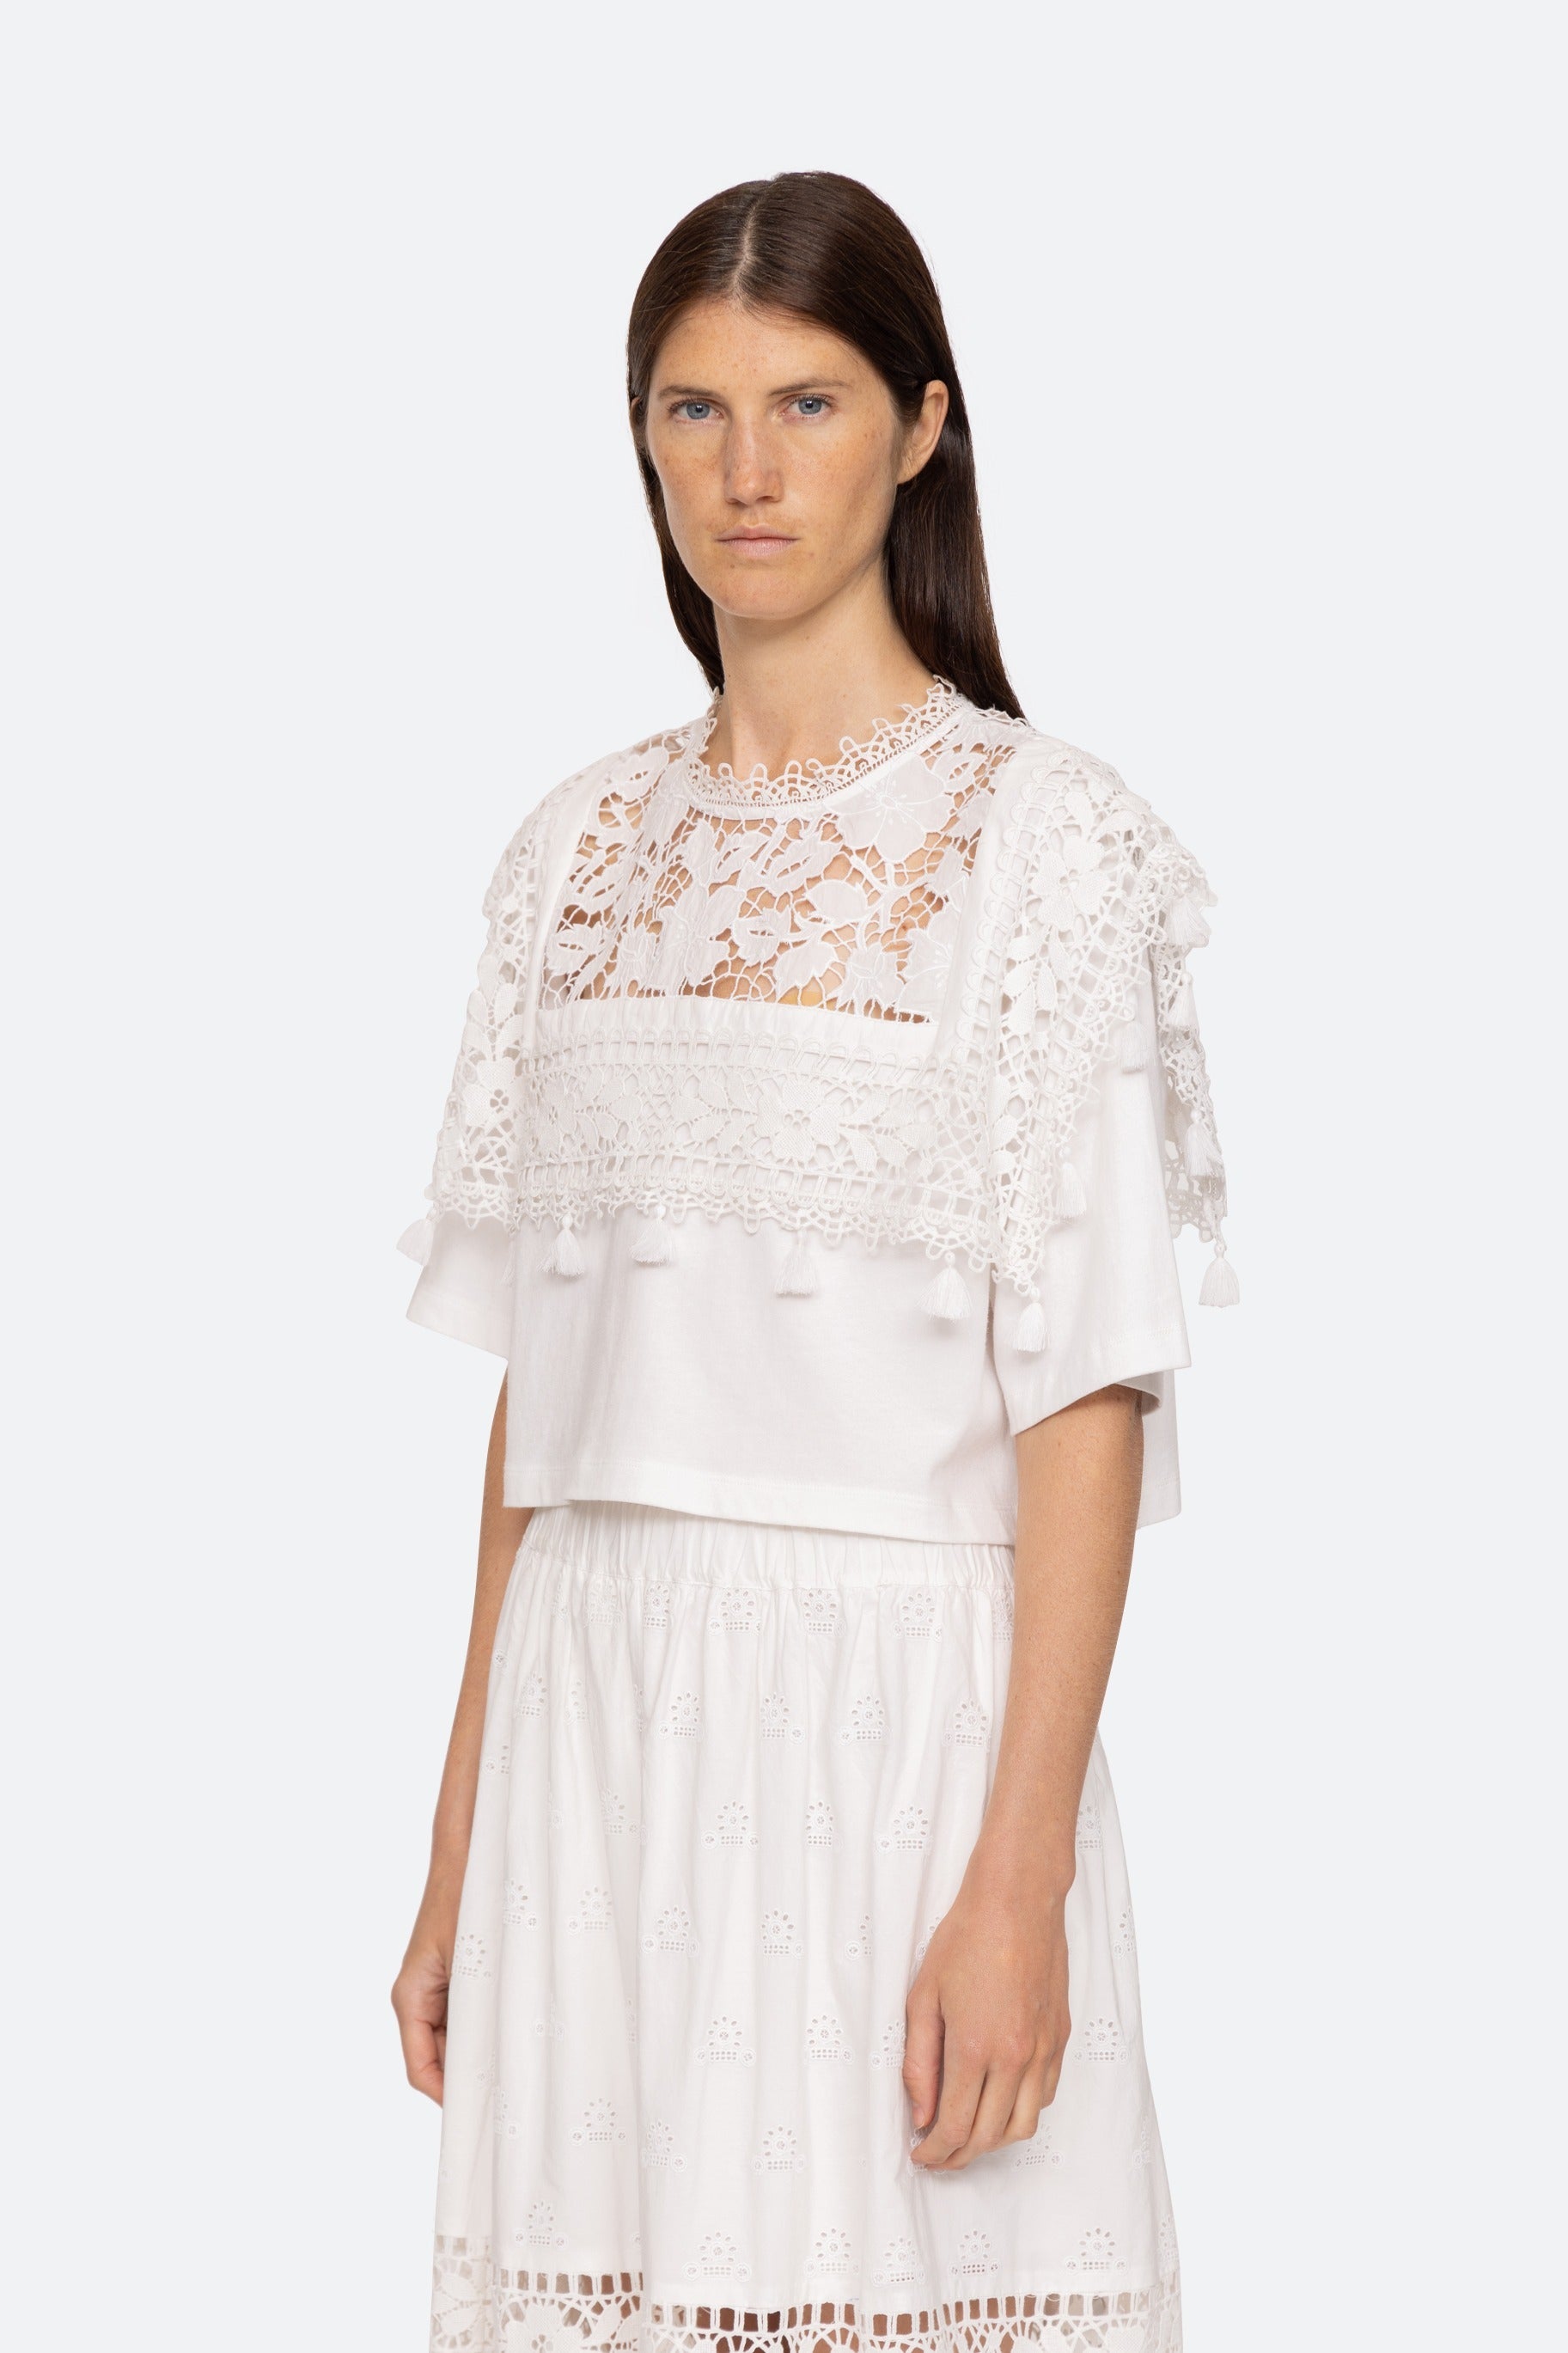 Joah Embroidery T-Shirt - White